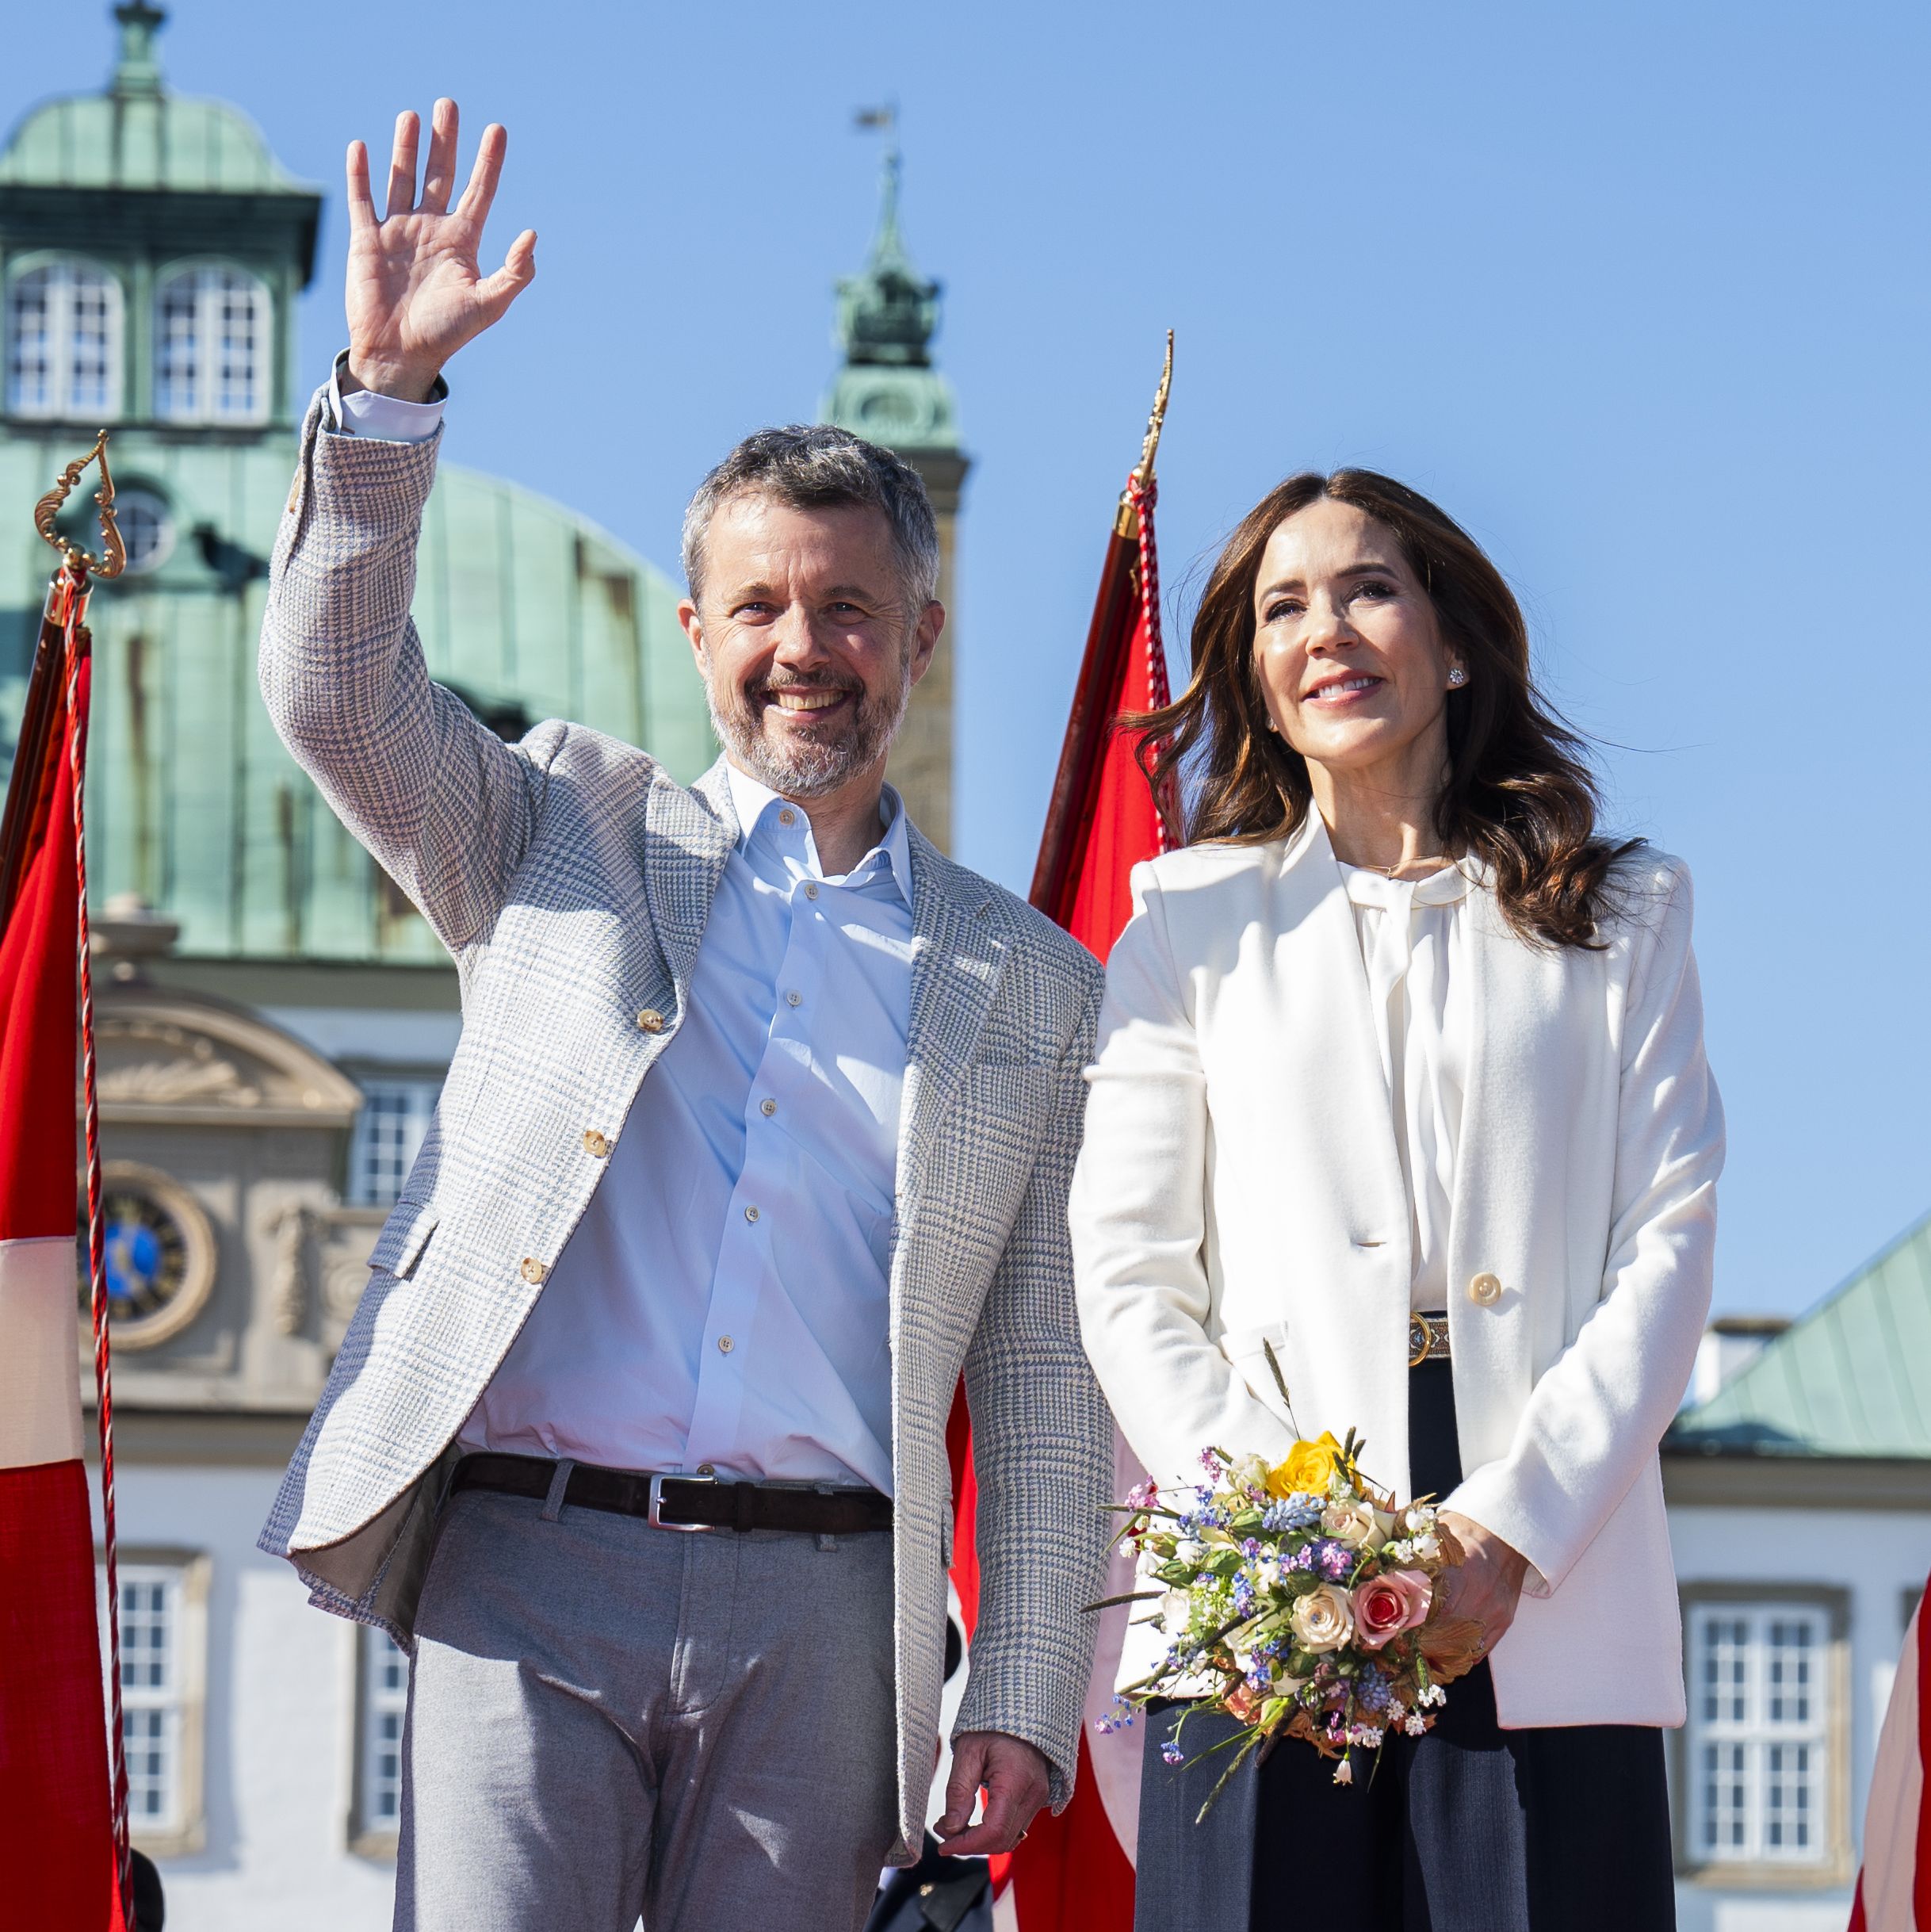 danish royal couple welcomed at fredensborg castle